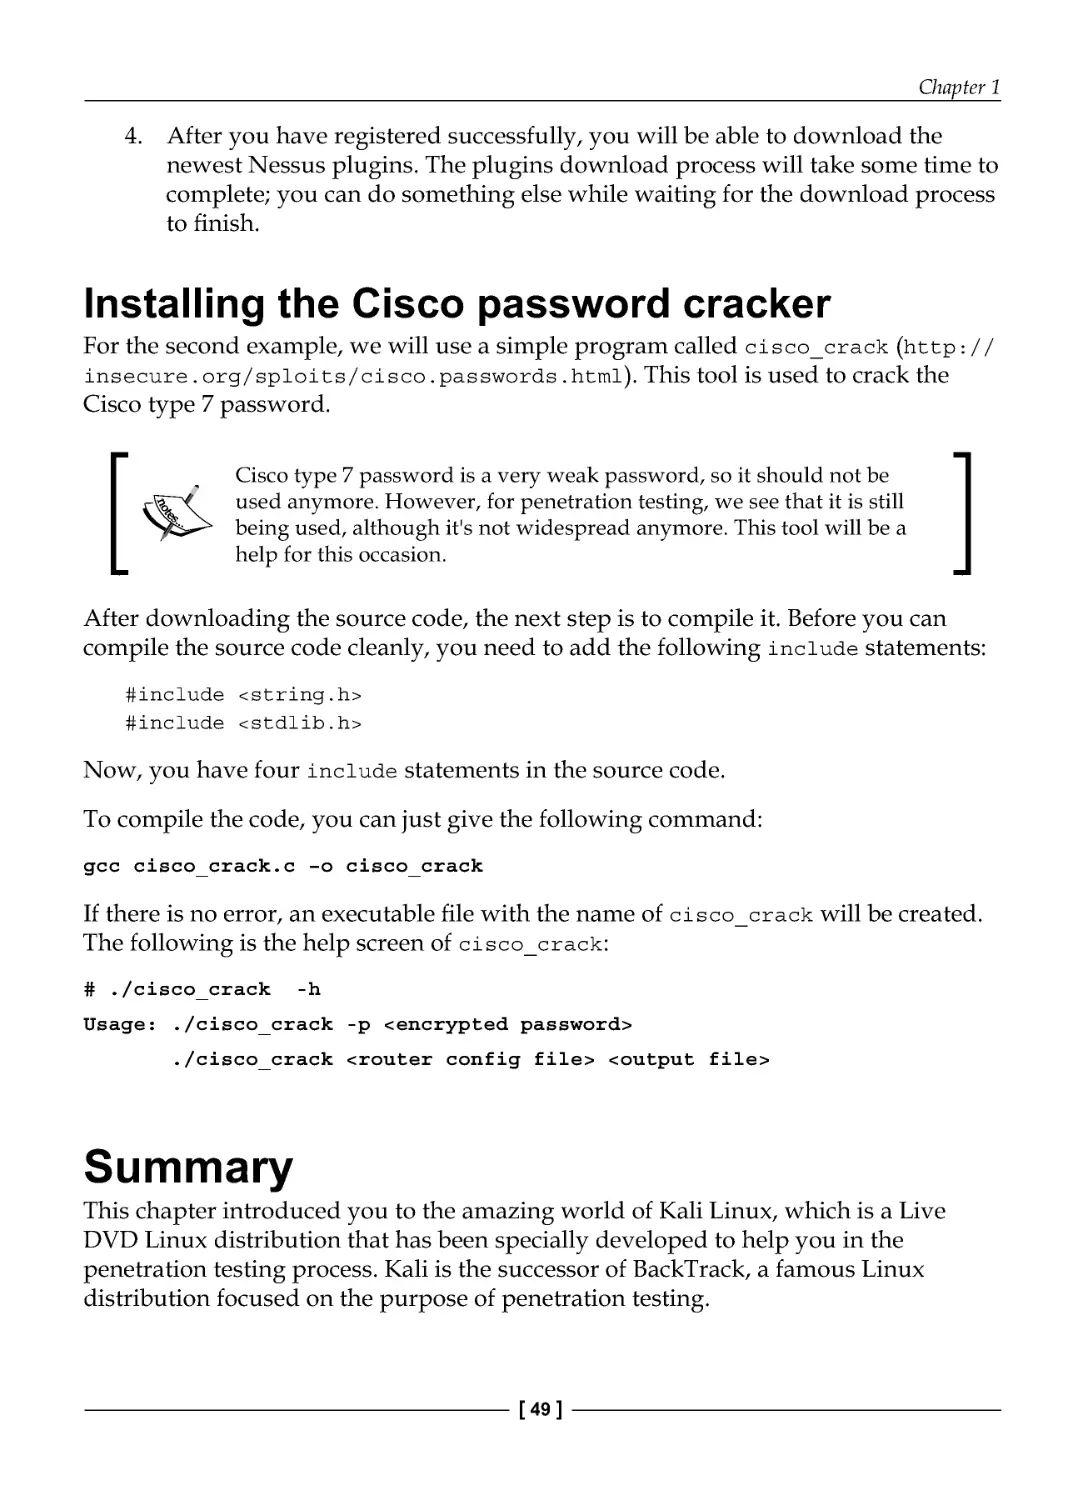 Installing the Cisco password cracker
Summary